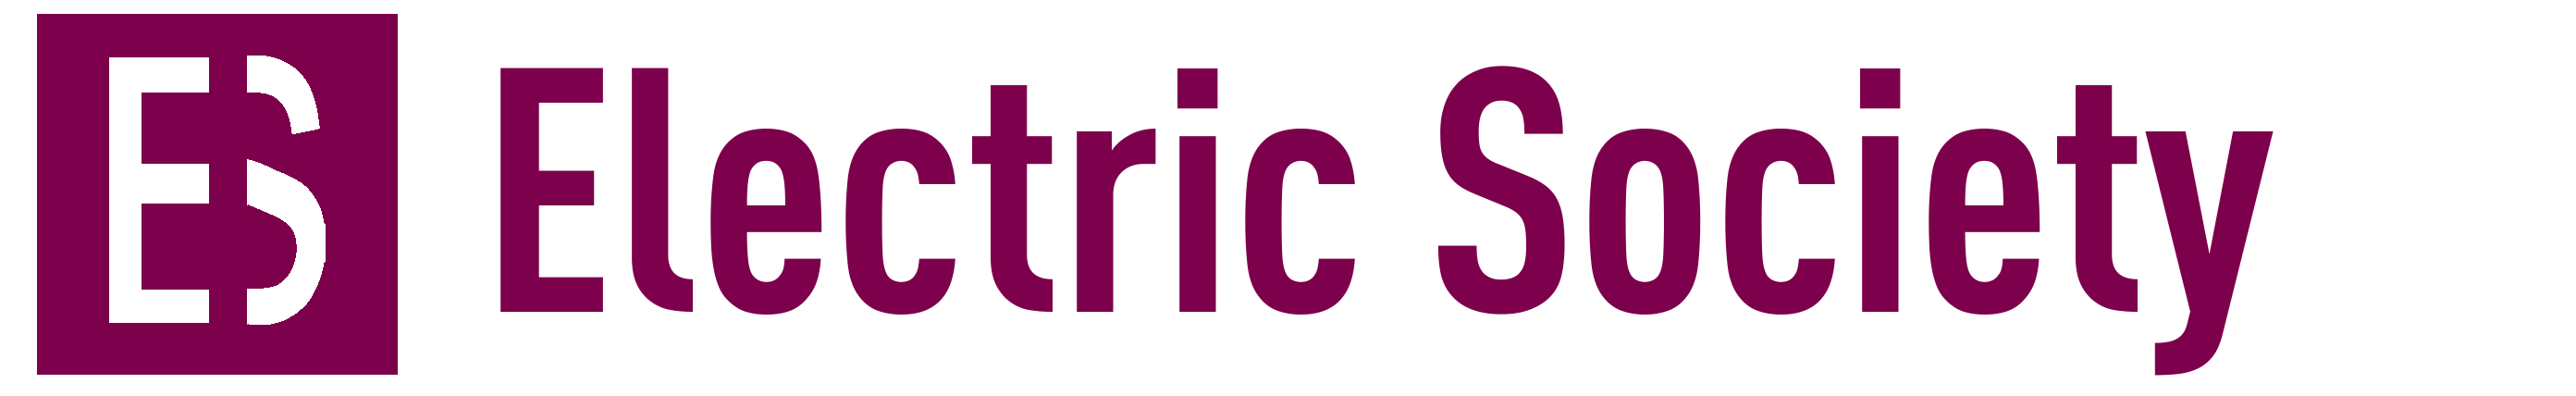 Electric_society_logo